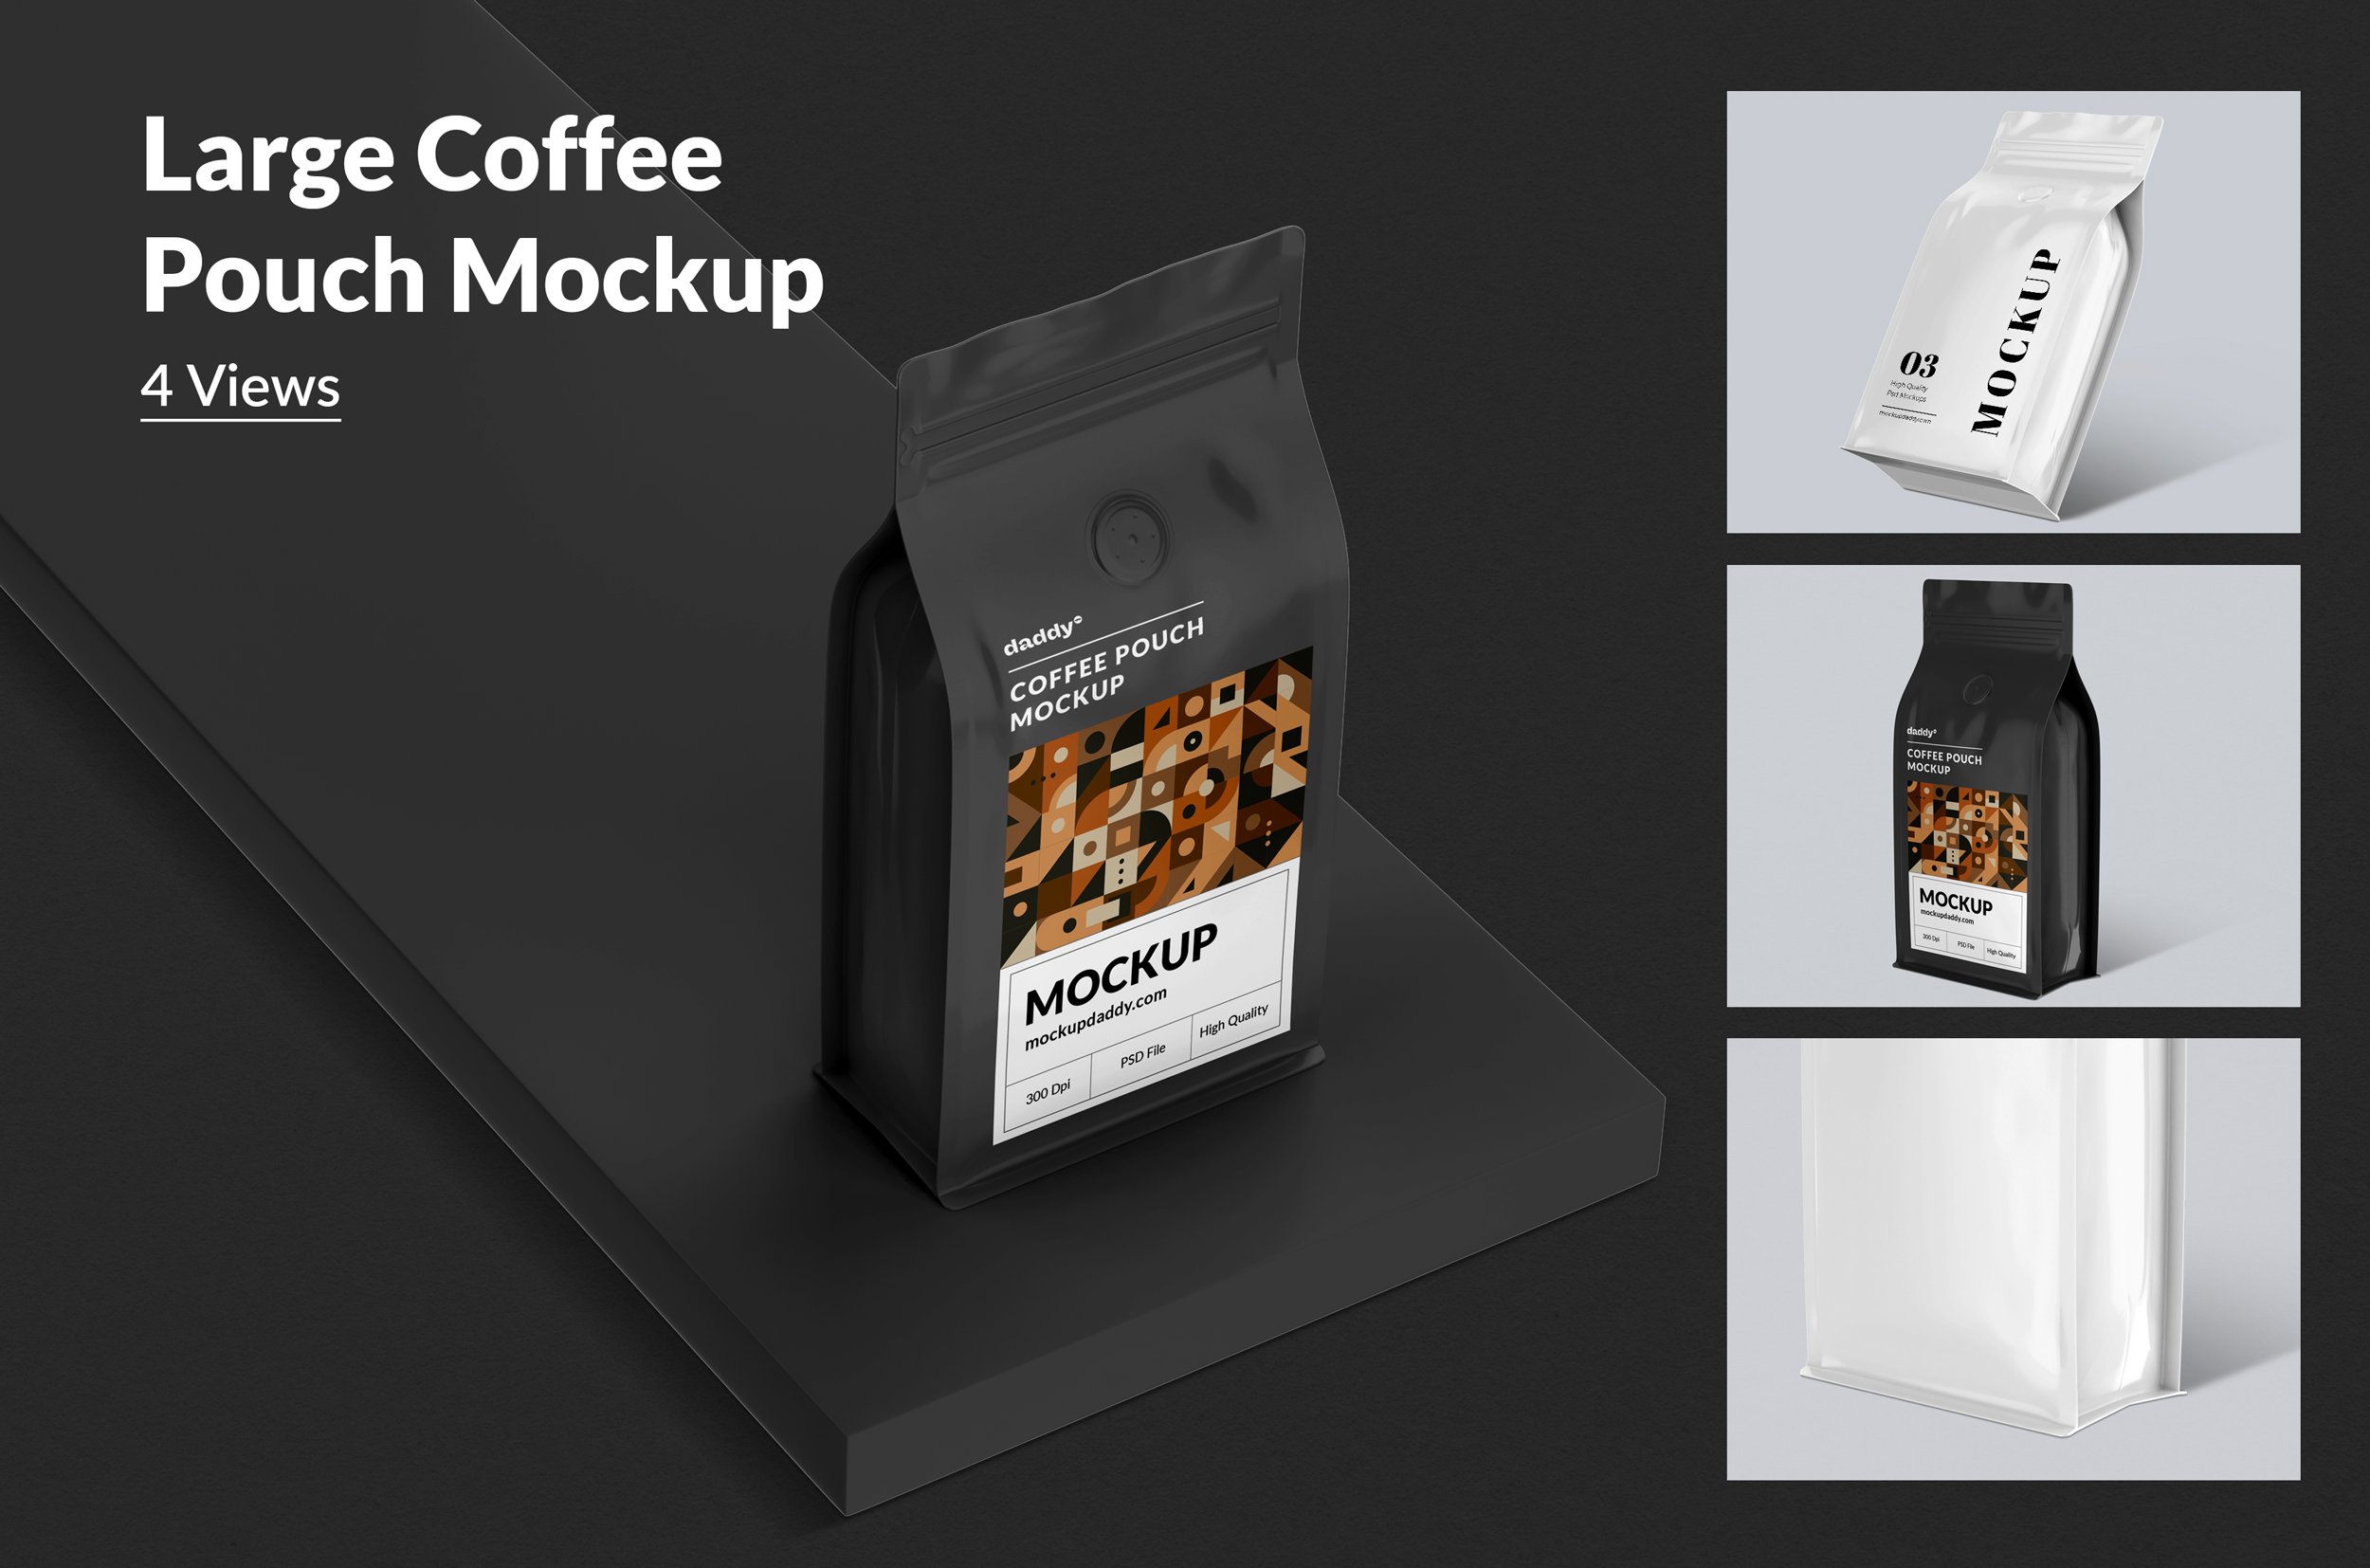 Coffee Bag Mockup (Large) cover image.